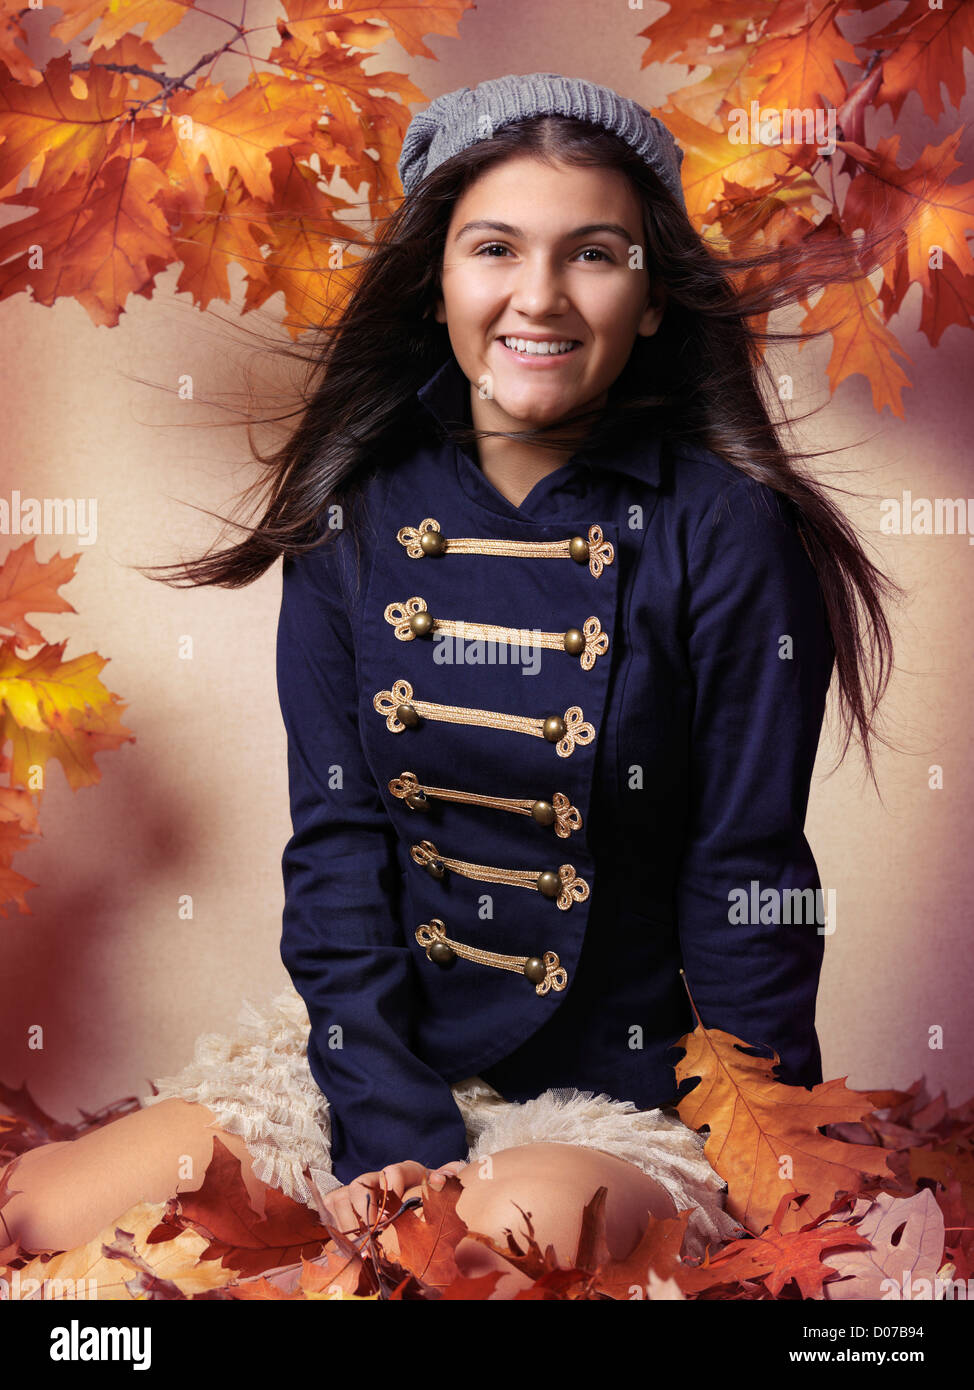 Smiling teenage girl sitting on fallen autumn leaves artistic fall fashion portrait Stock Photo